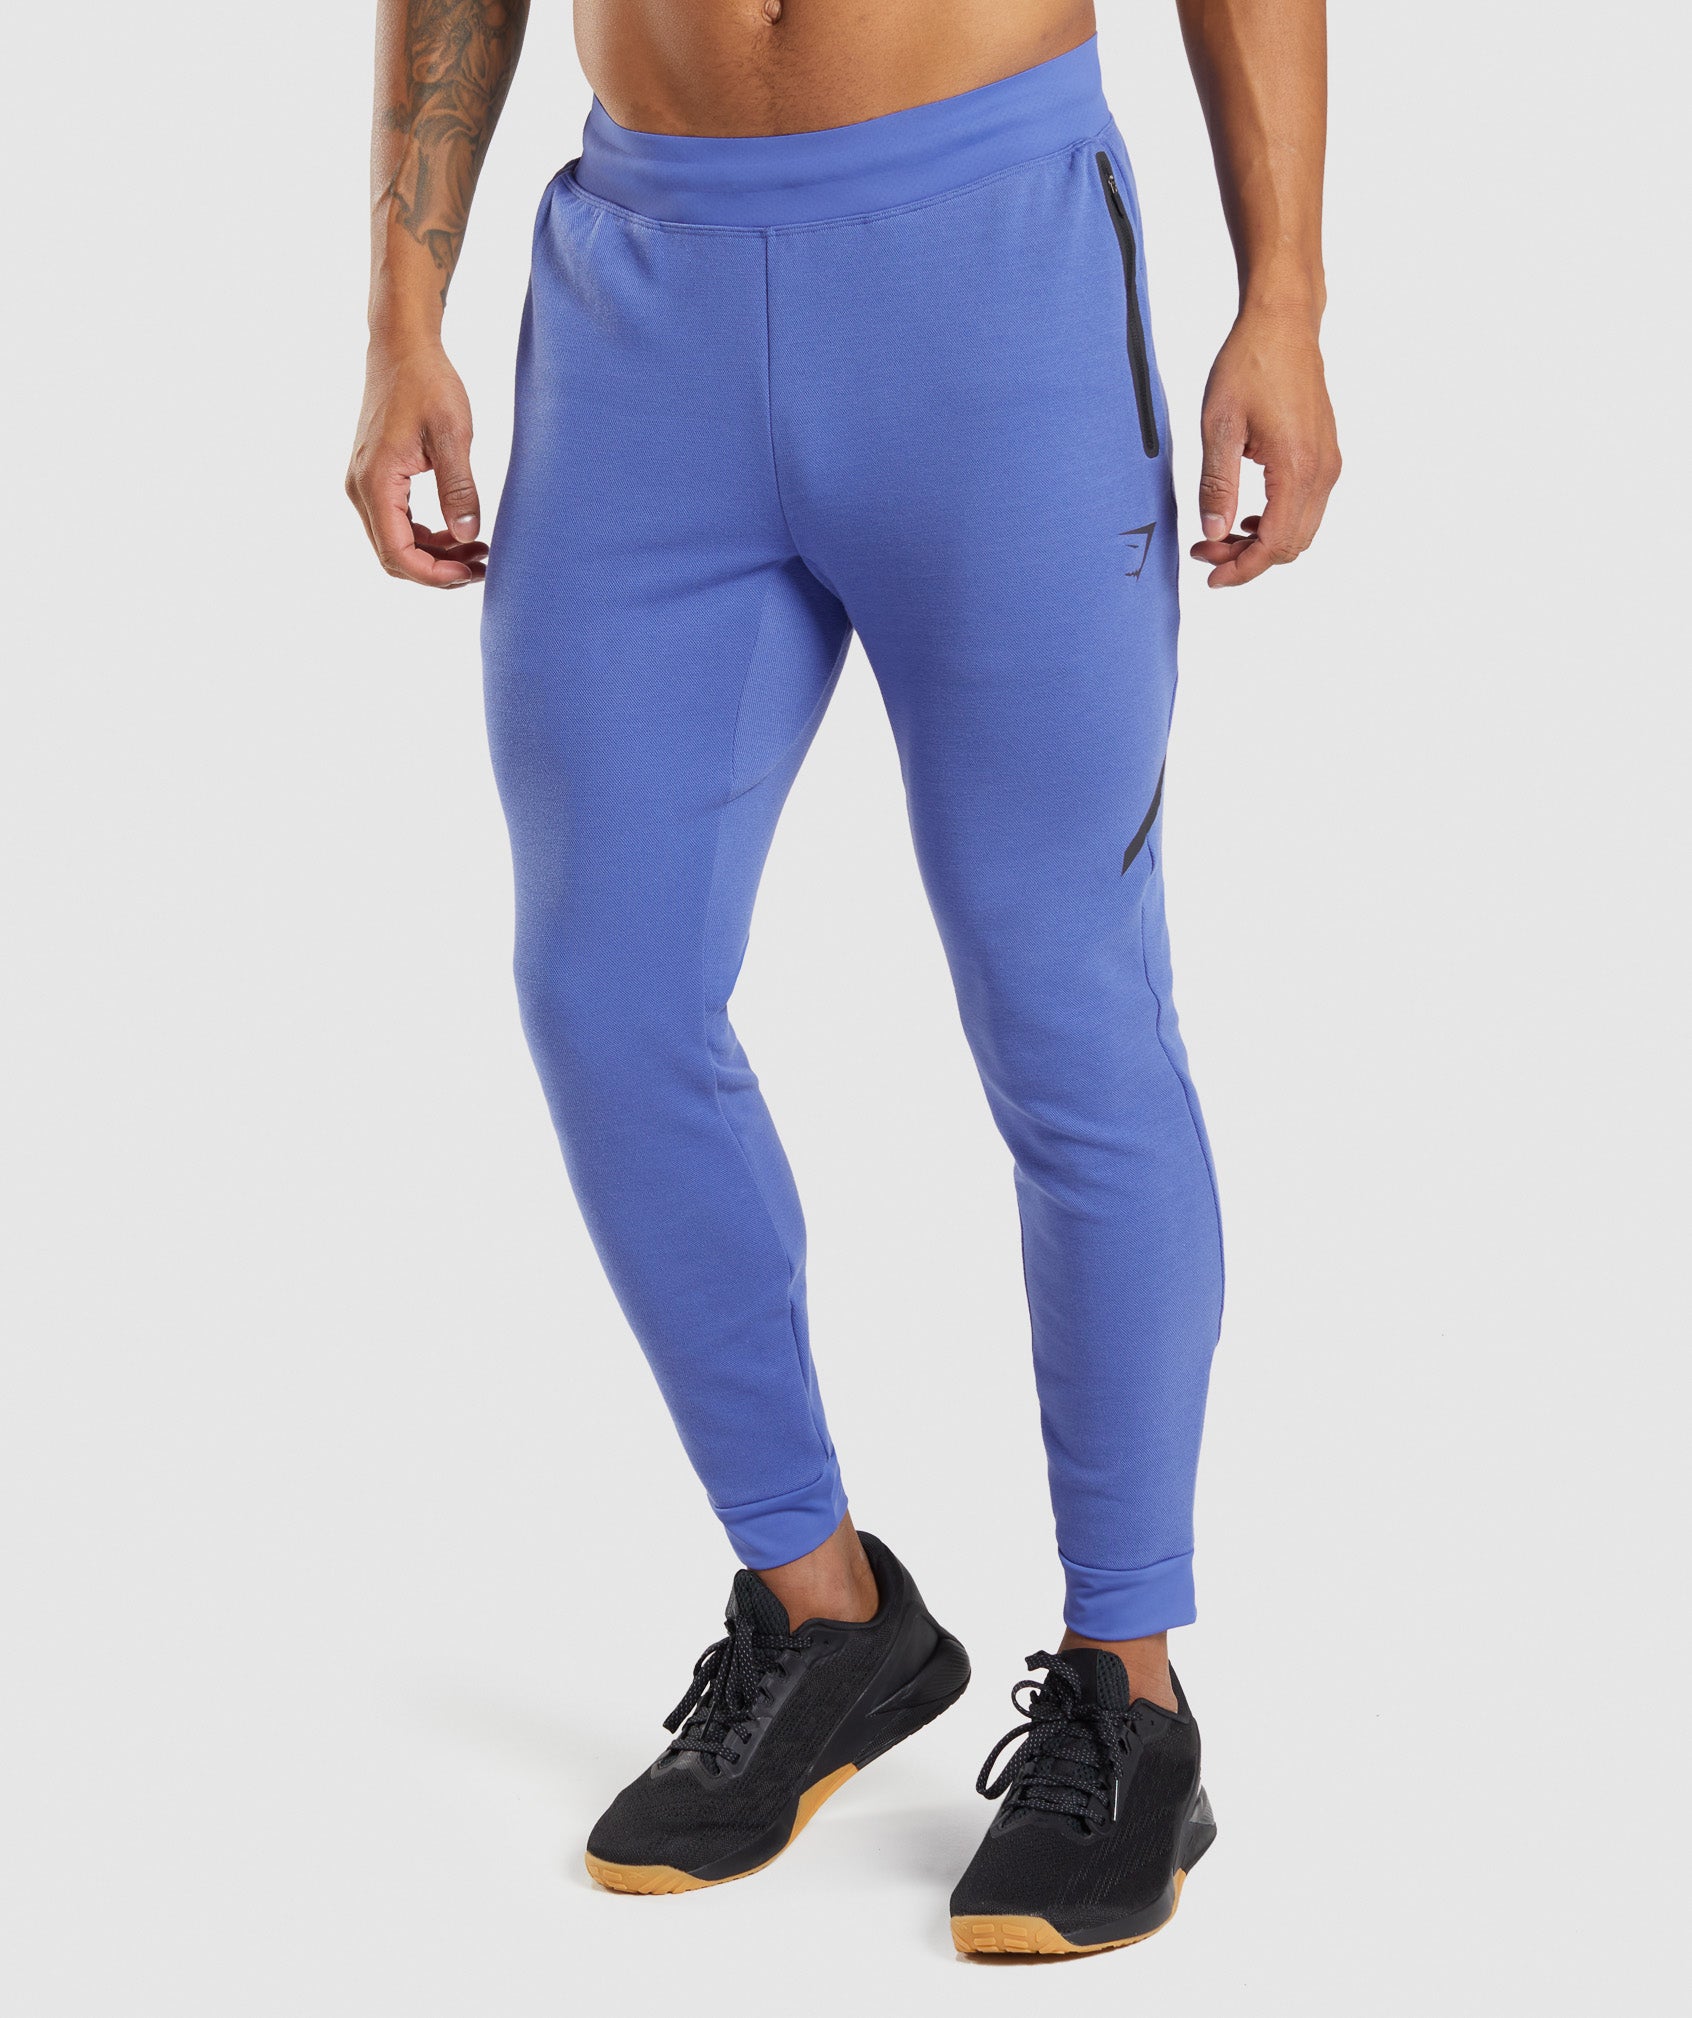 Men's Joggers & Sweatpants, Gym & Fitness Clothing